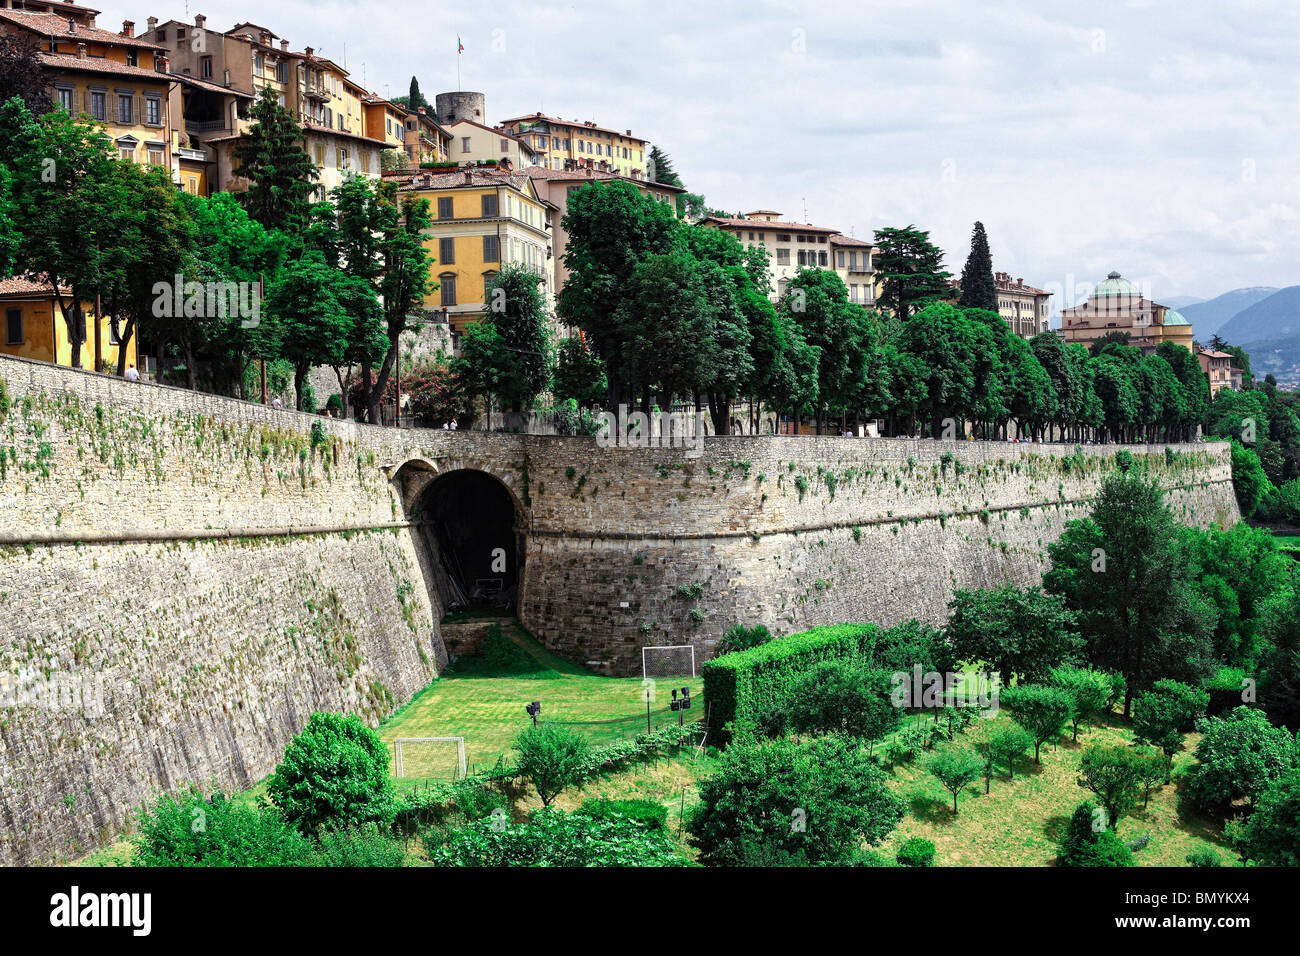 Vista de la ciudad italiana de Bergamo alta Foto de stock